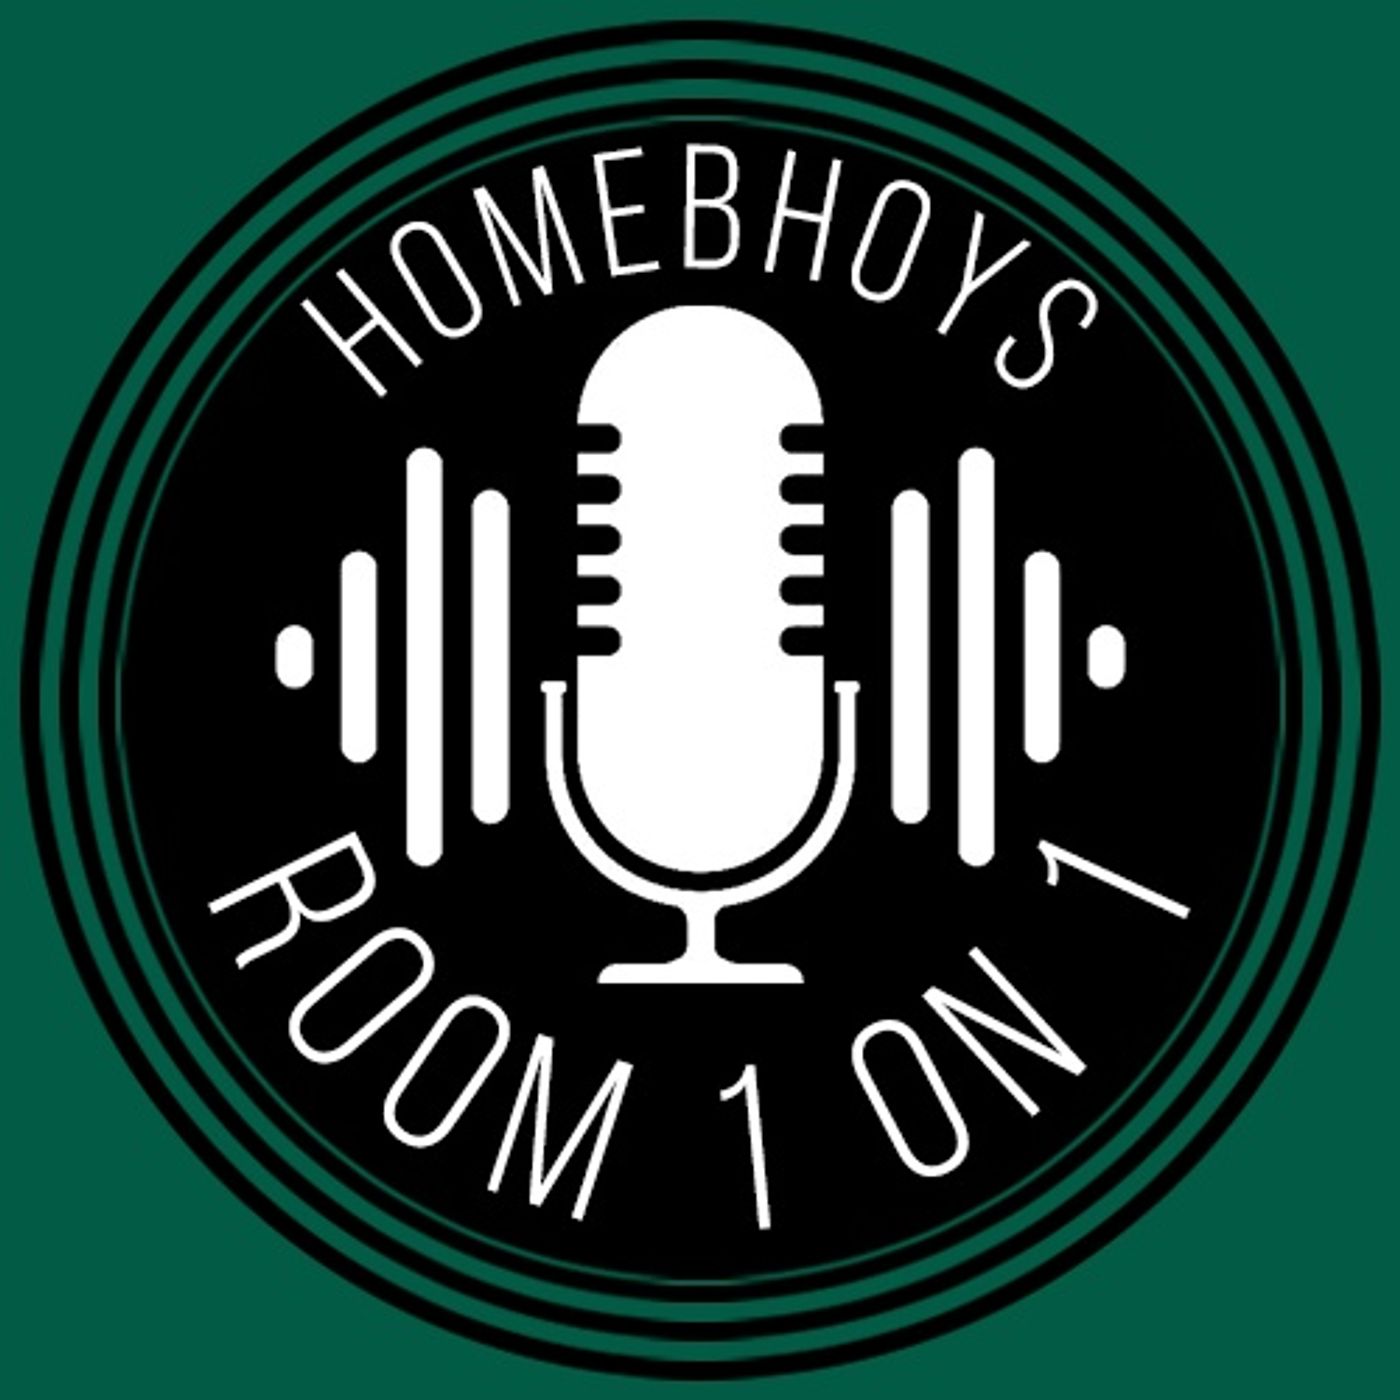 Homebhoys - Room 1 on 1 - Ross County